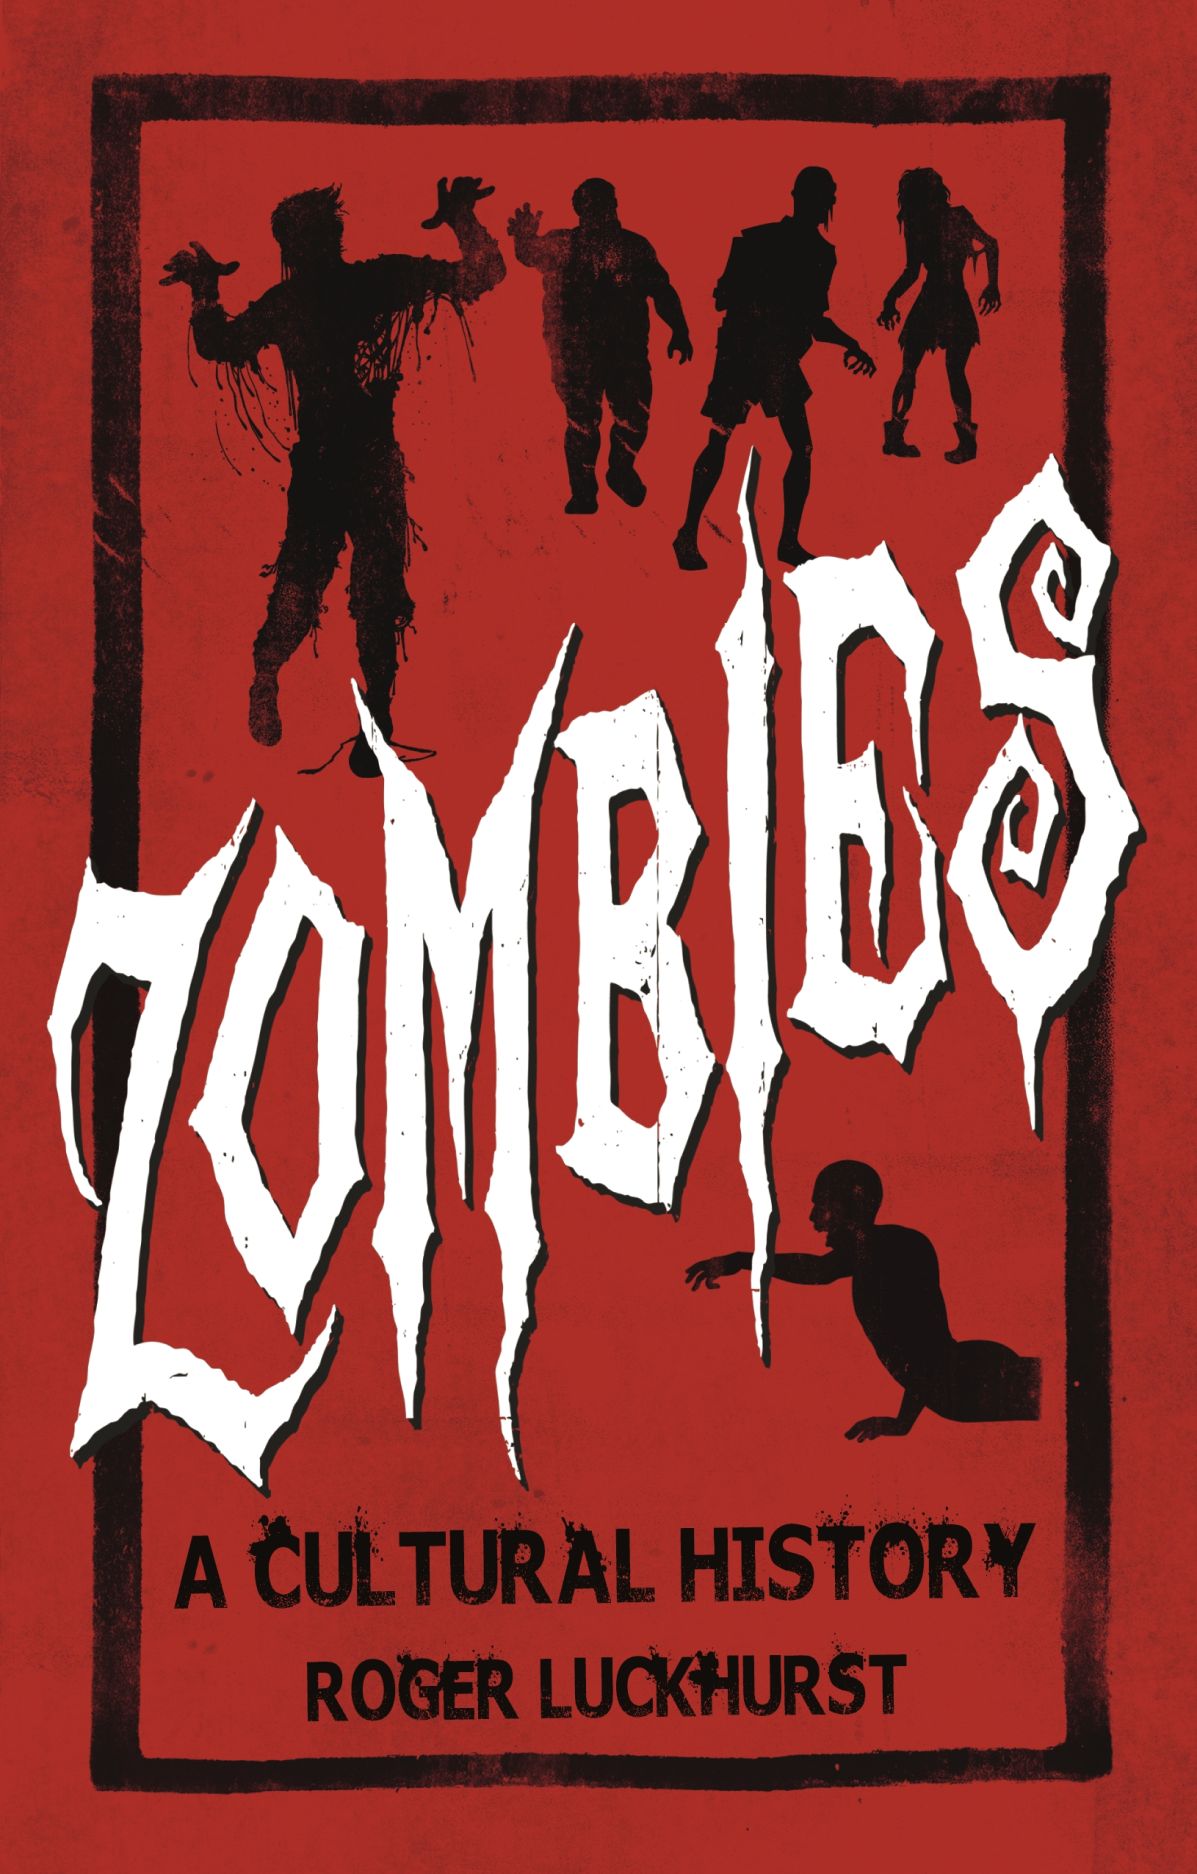 History of Zombies - Origins, Pop Culture & Film